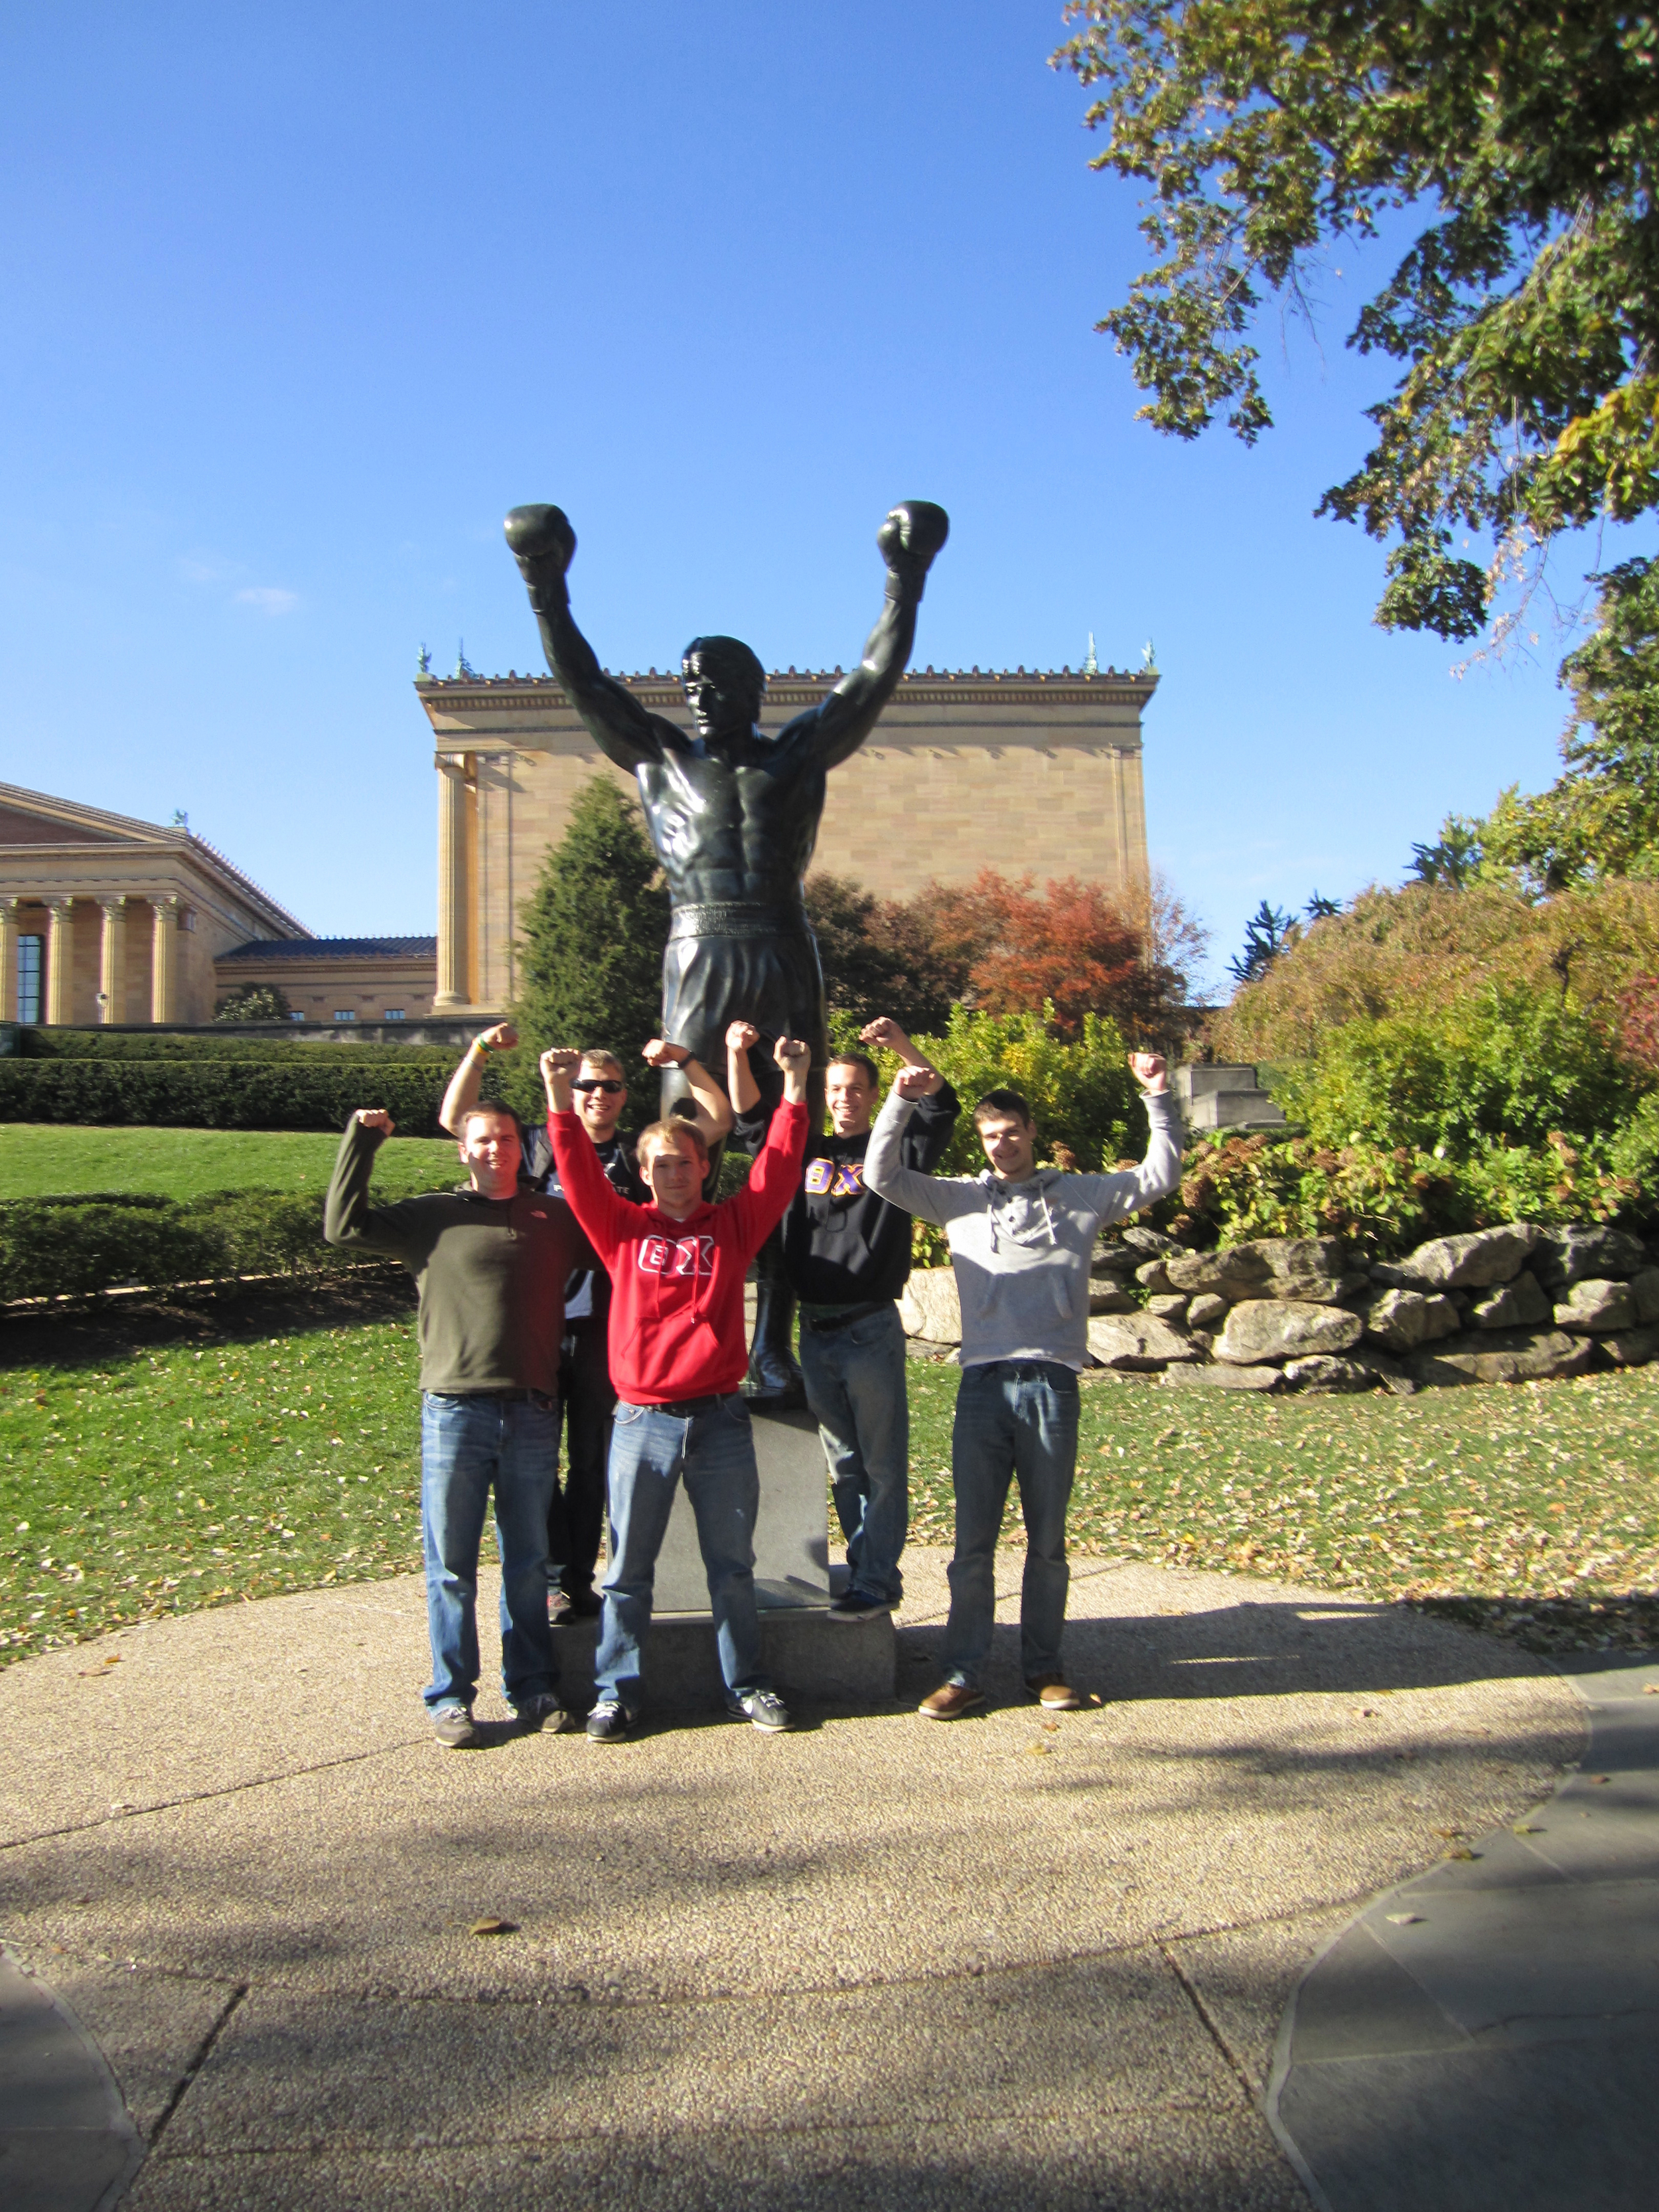  L to R: Jason Clark, Greg Smith, Gerad Freeman, Grant Gaston, and Sebastian Reigber posing with Rocky
Fall 2011 